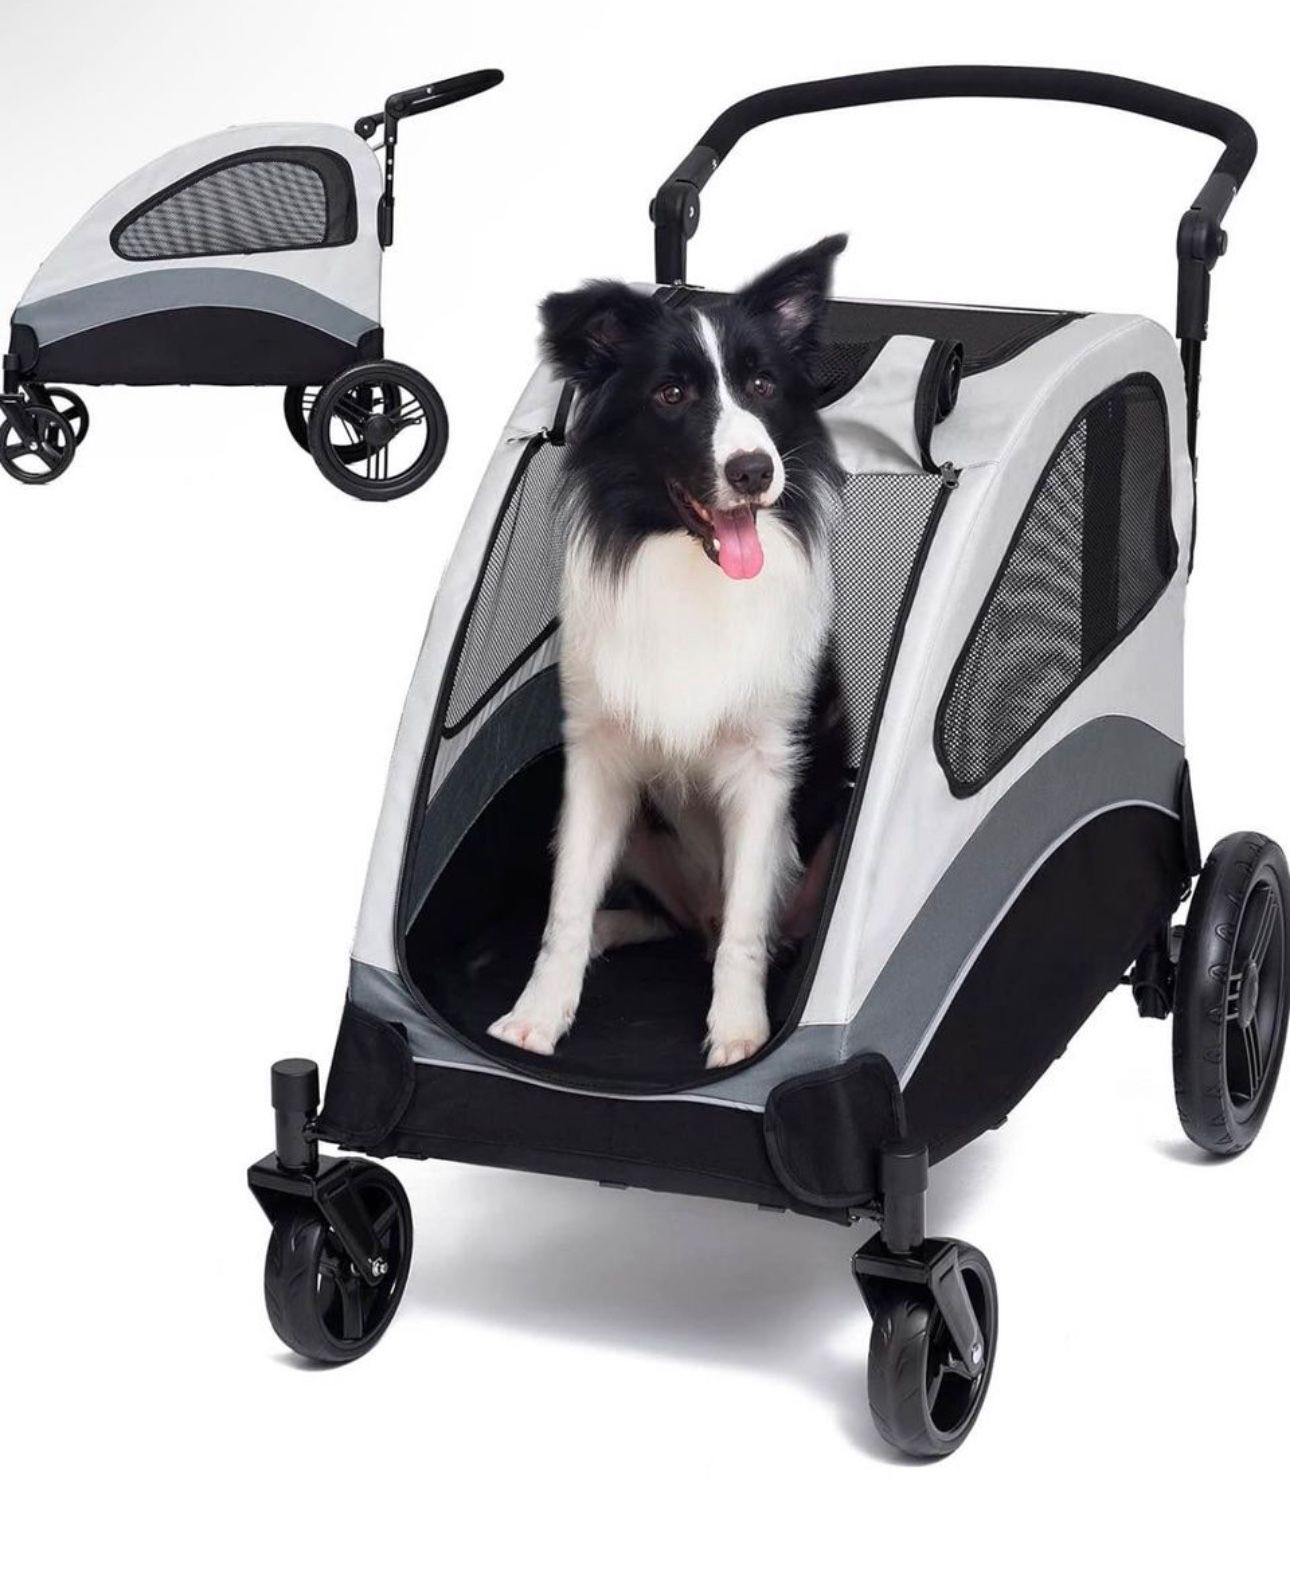 Dog Stroller for Medium Large Dogs - Foldable Pet Stroller - Large Dog Stroller up to 100 lbs - Dog